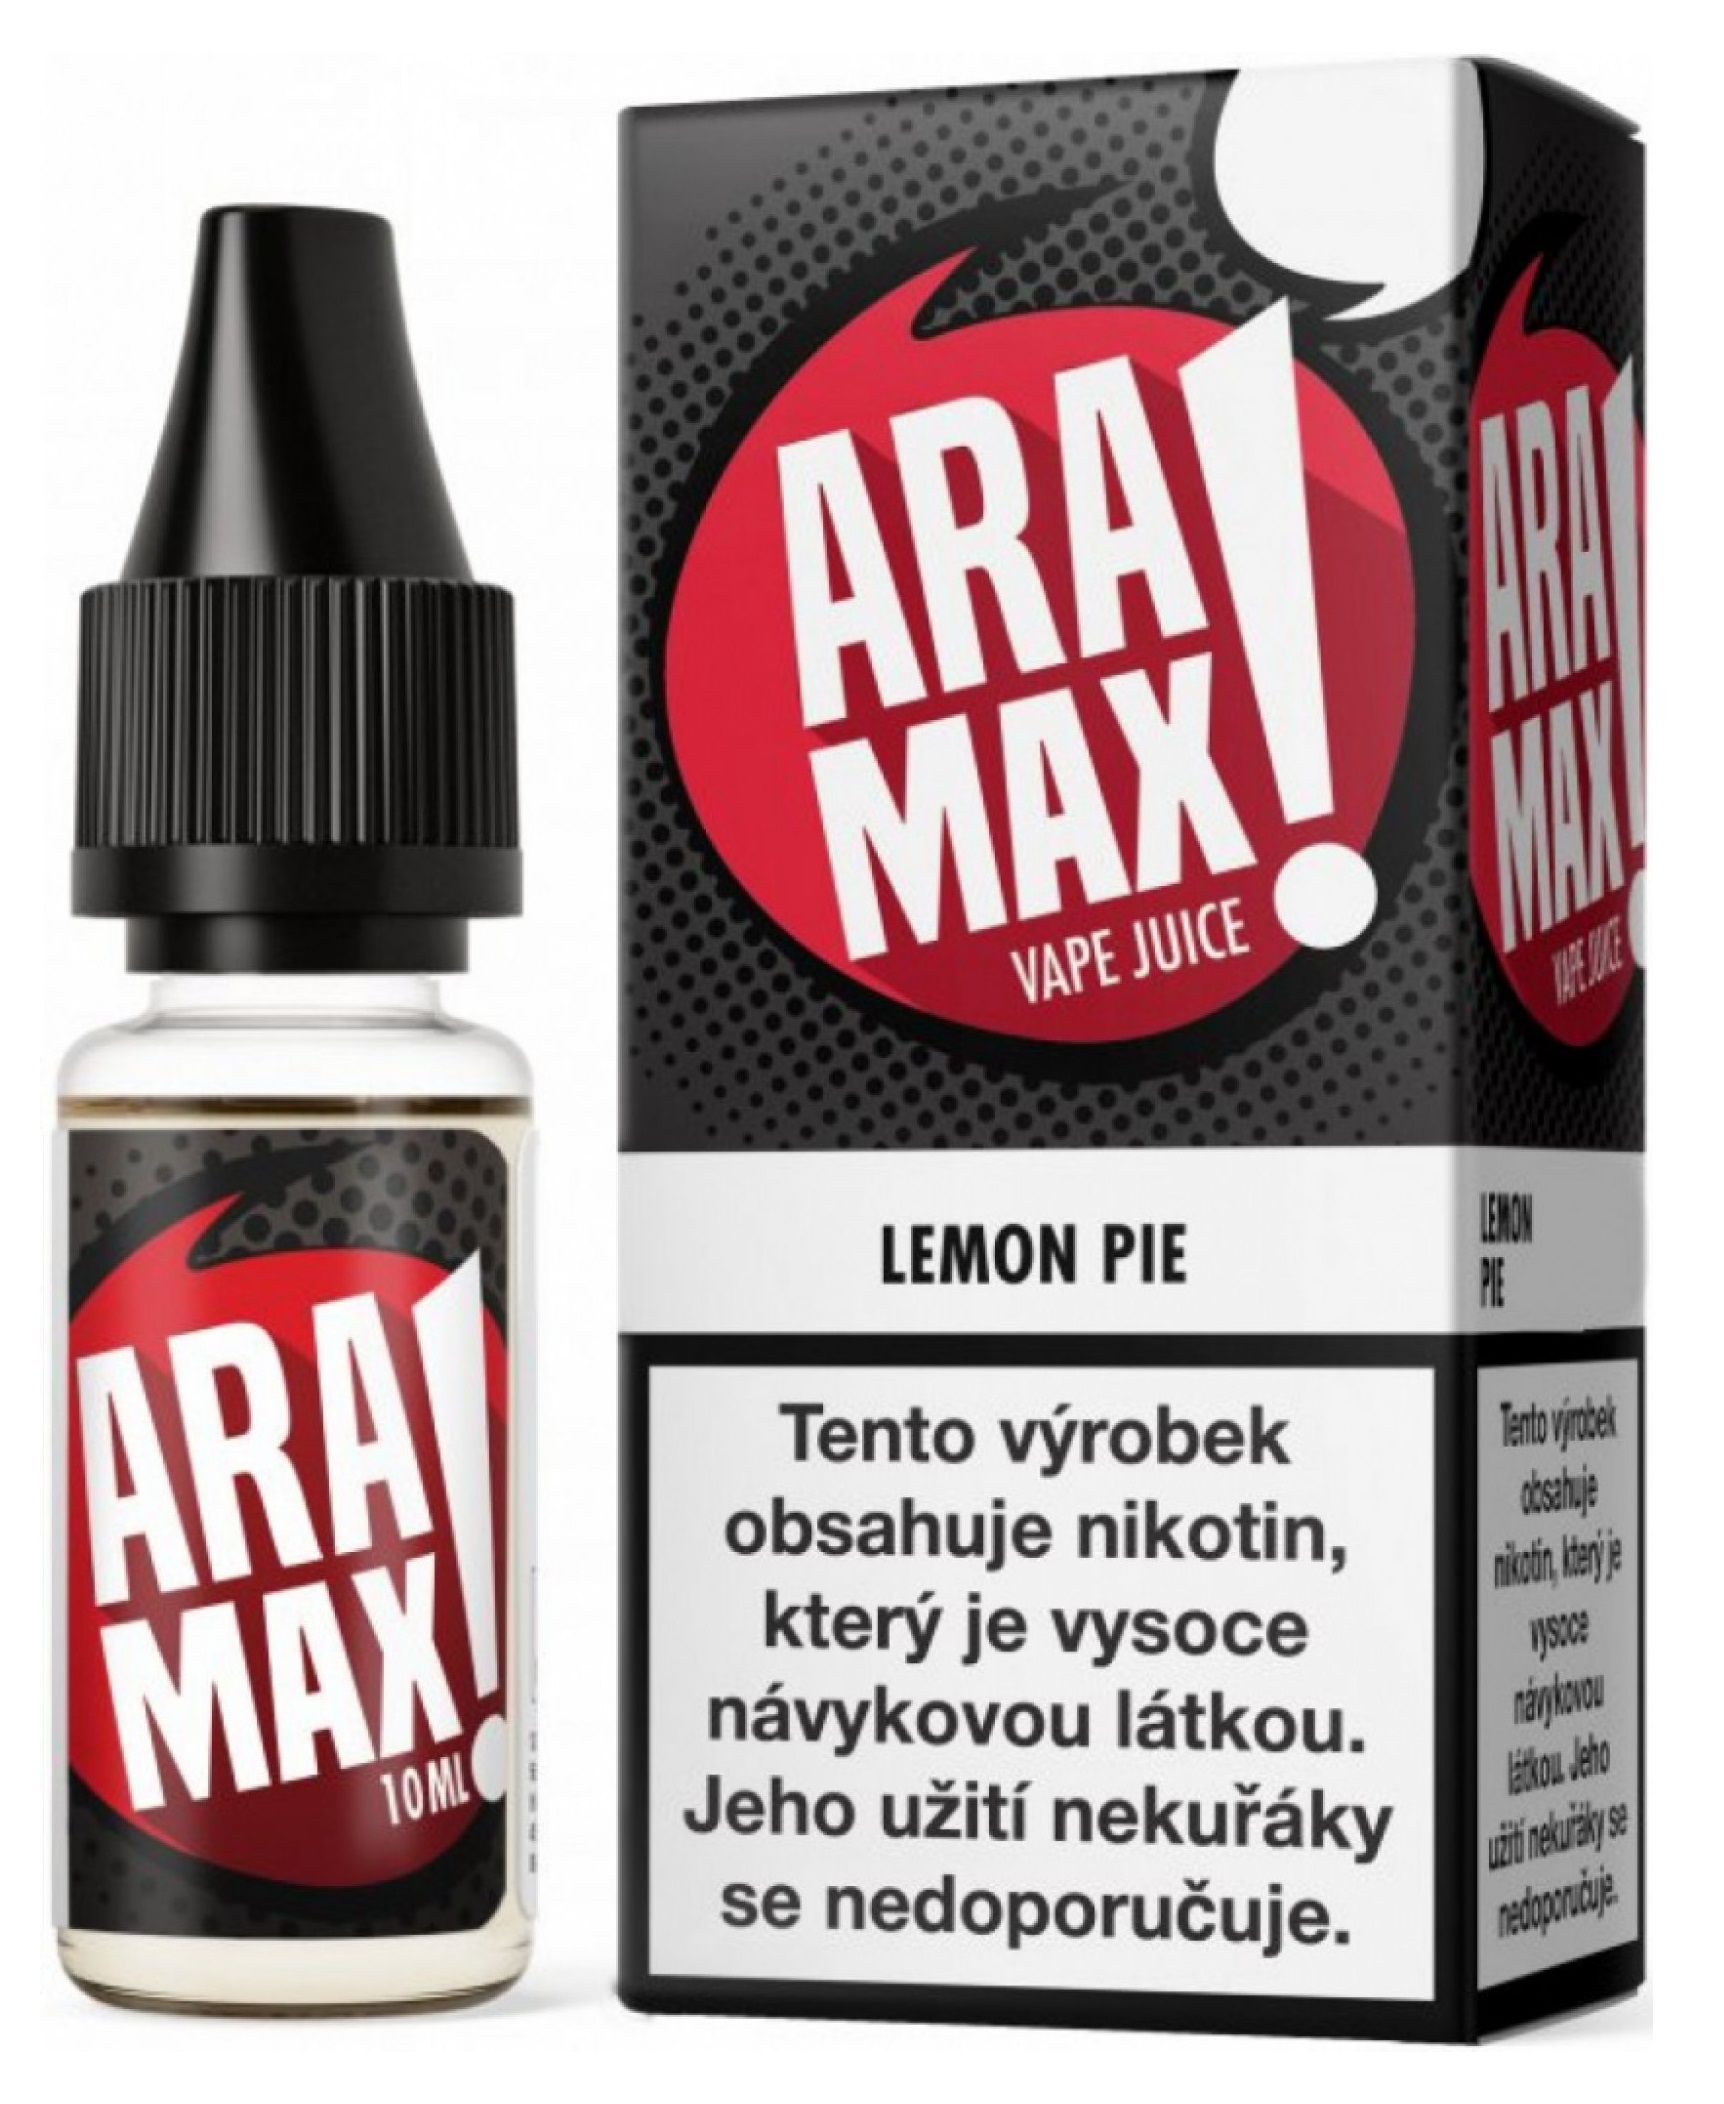 ARAMAX Lemon Pie 10ml Množství nikotinu: 18mg